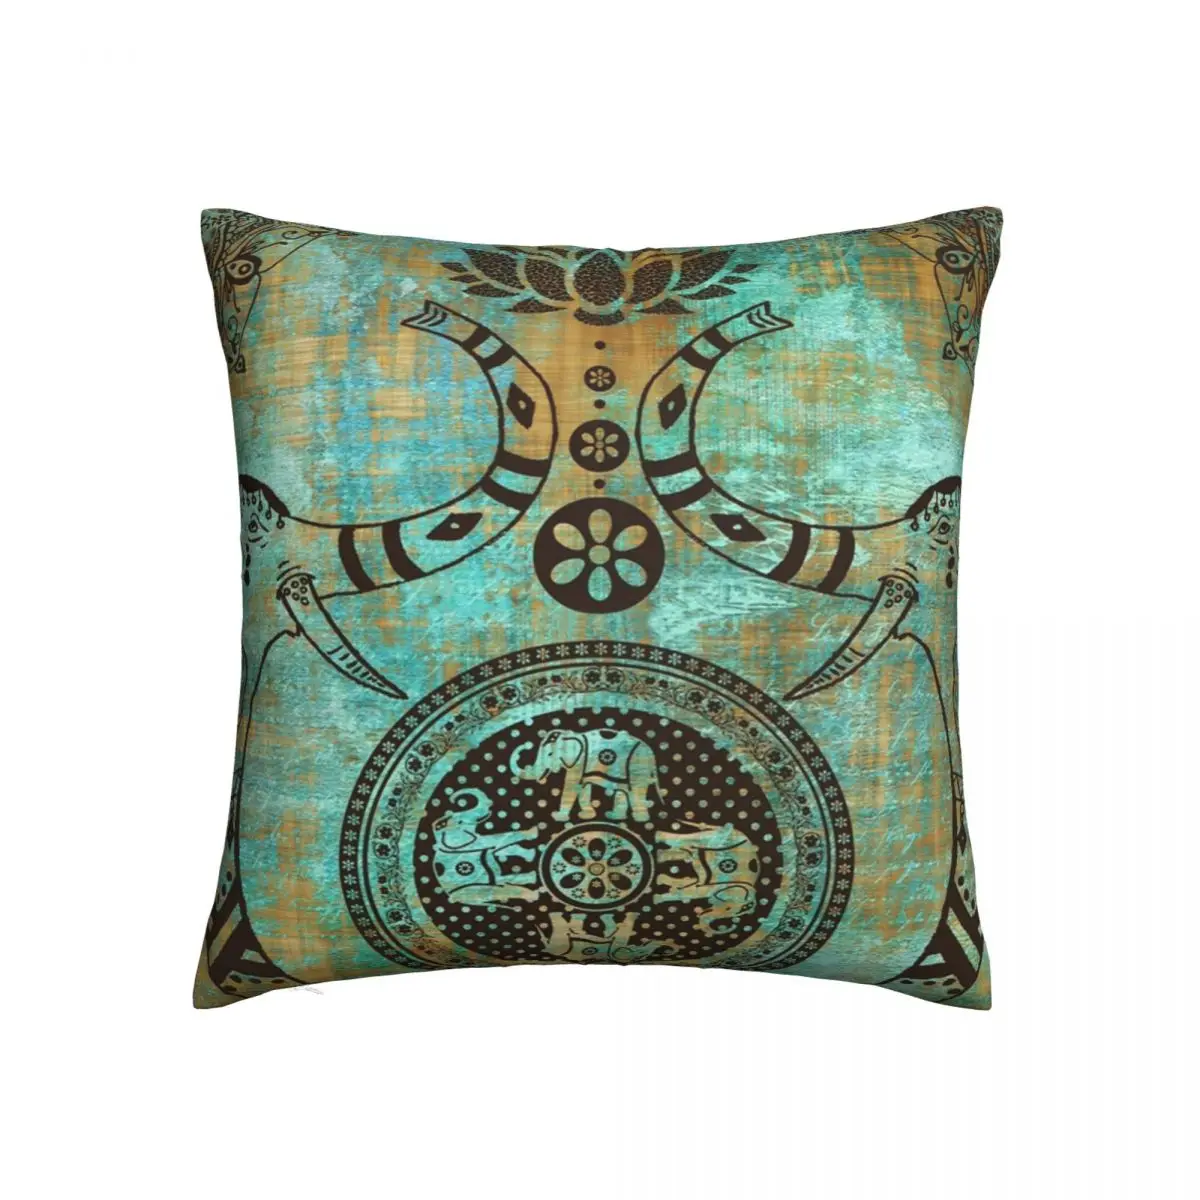 Elephants Lotus Mandala Pillowcase Printed Polyester Cushion Cover Decor Indian Elephant Pillow Case Cover Home Zippered 45X45cm